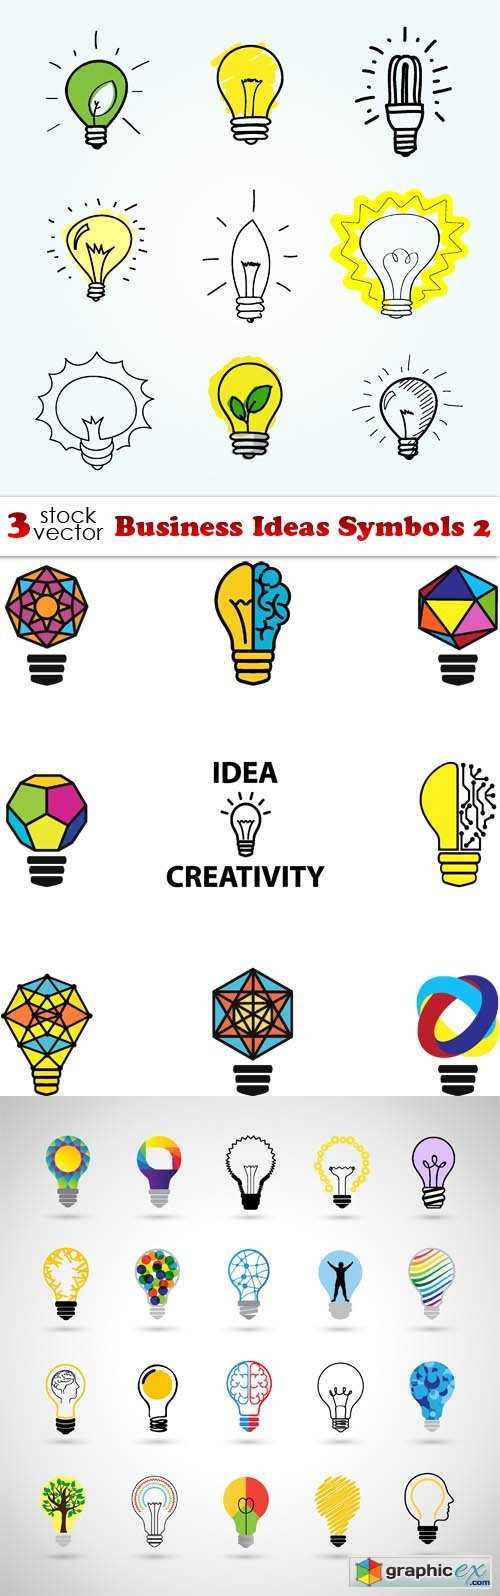 Business Ideas Symbols 2